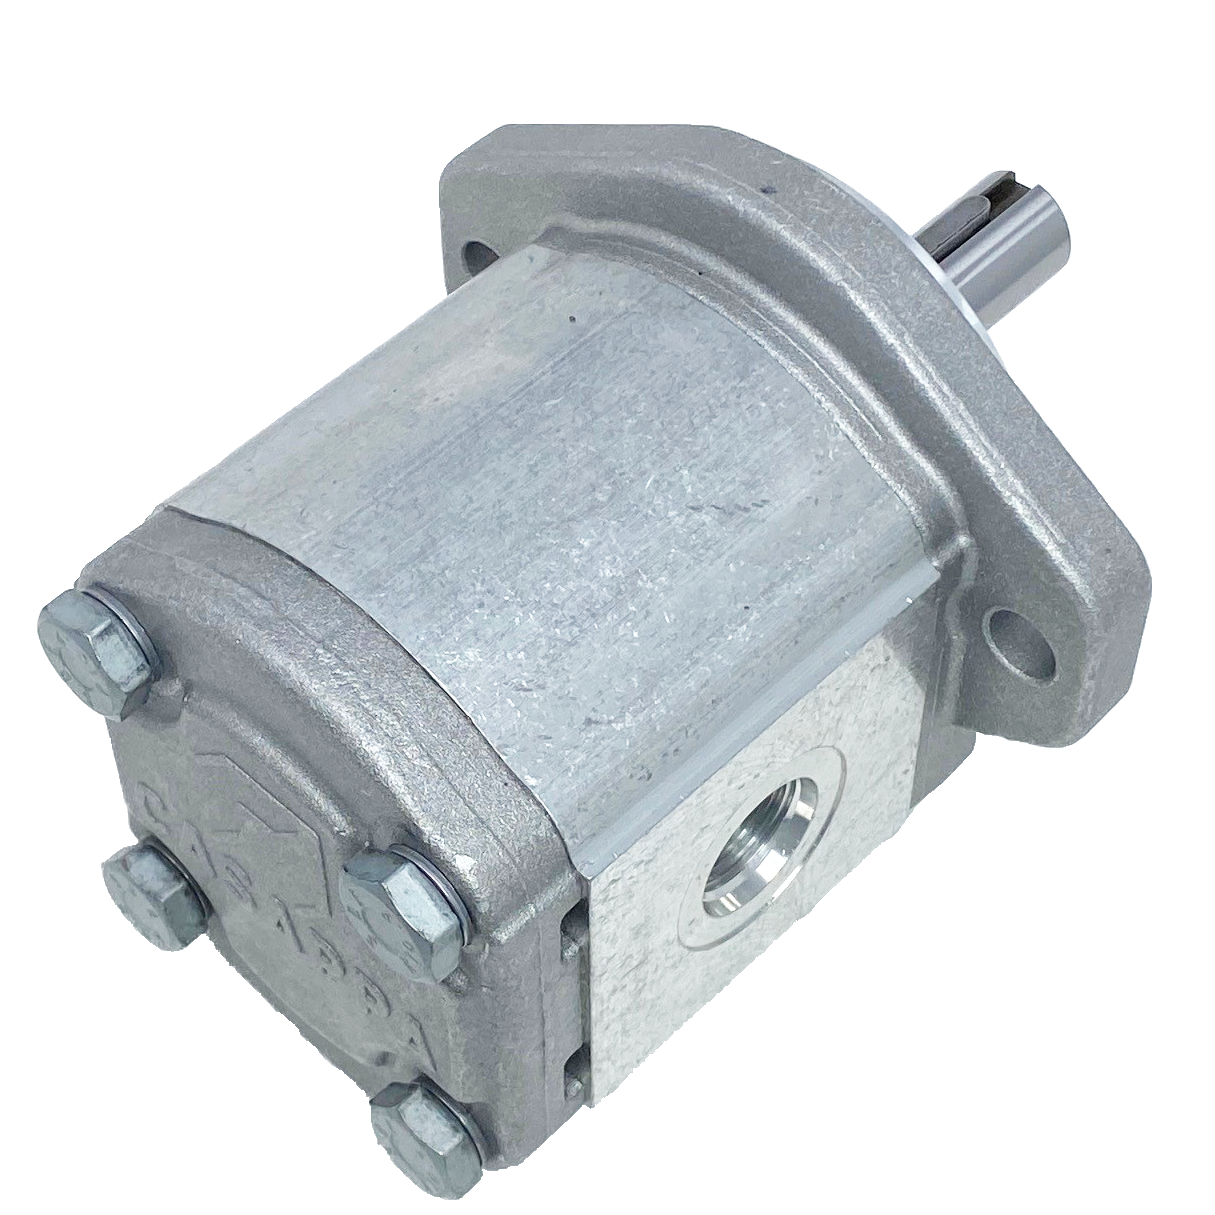 PLM20.20R0-49S1-LOC/OD-N-EL : Casappa Polaris Gear Motor, 21.14cc, 2900psi Rated, 3000RPM, Reversible Rear External Drain, 3/4" Bore x 3/16" Key Shaft, SAE A 2-Bolt Flange, 0.625 (5/8") #10 SAE Inlet, 0.75 (3/4") #12 SAE Outlet, Aluminum Body & Flange